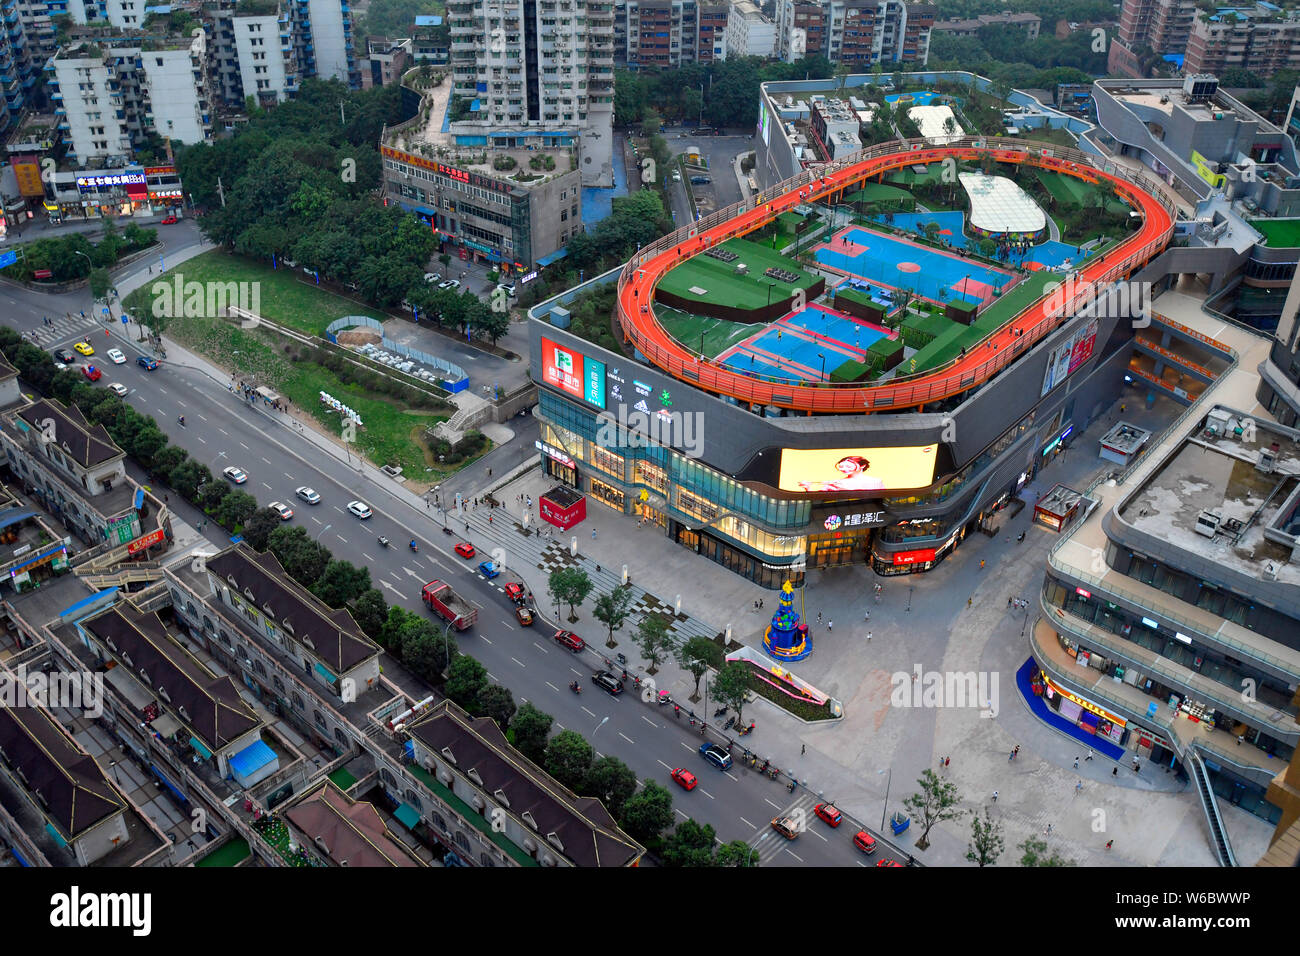 Vista aérea de un estadio en la azotea de un centro comercial en Chongqing, China, 22 de mayo de 2018. Un estadio en el techo de un centro comercial fue fotografiado i Foto de stock